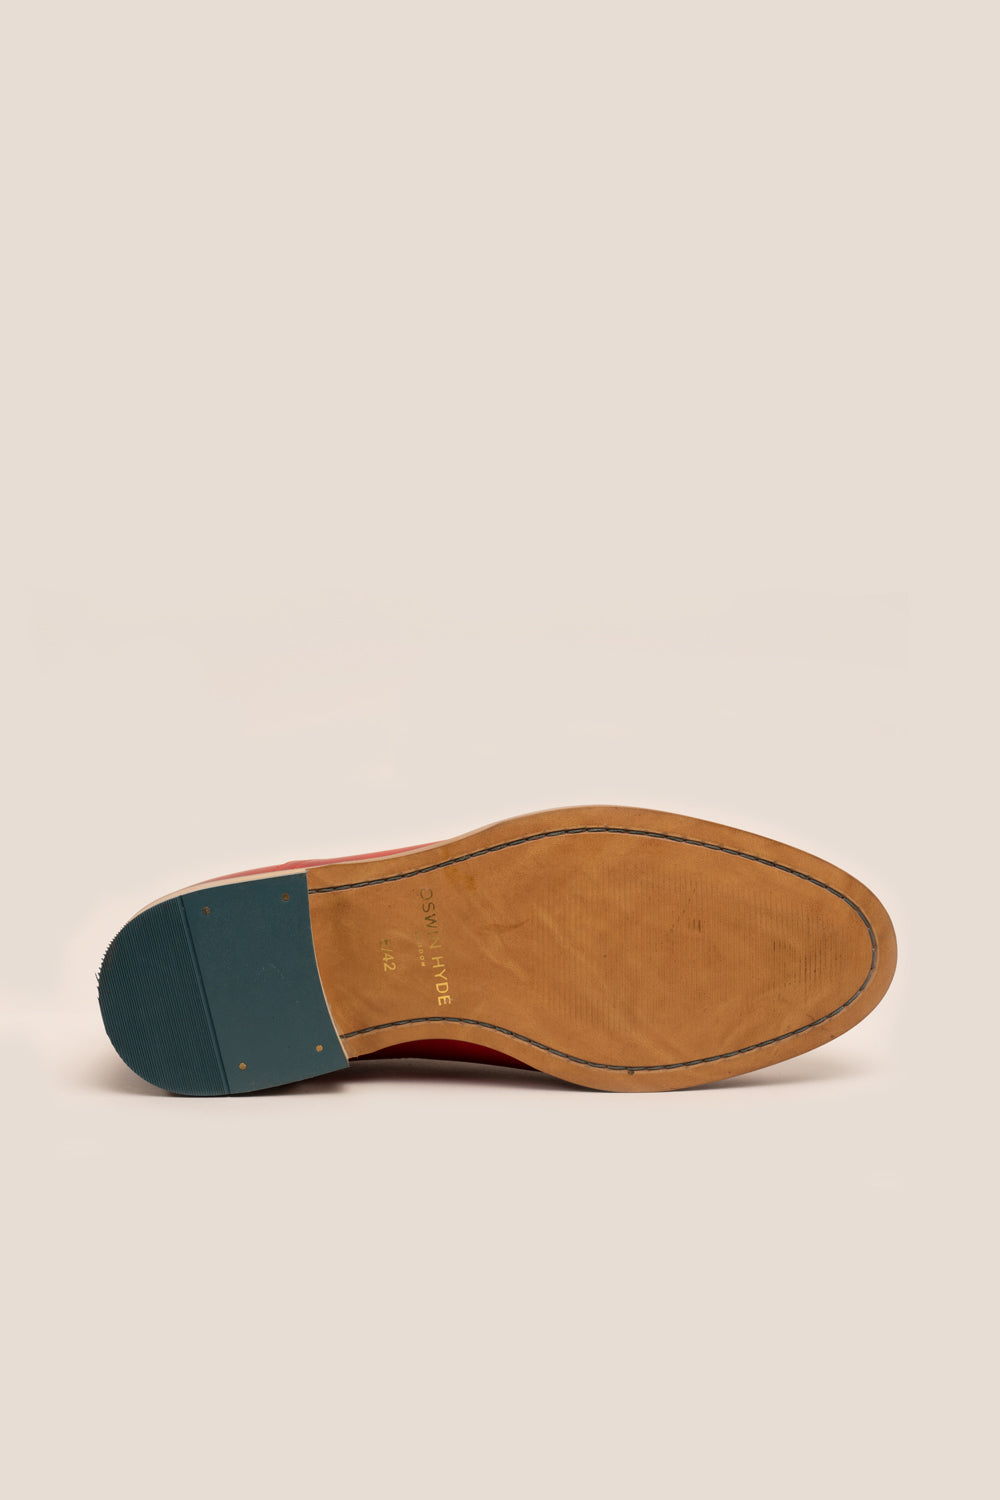 Oswin Hyde Cherry Leather Toecap Oxford shoe